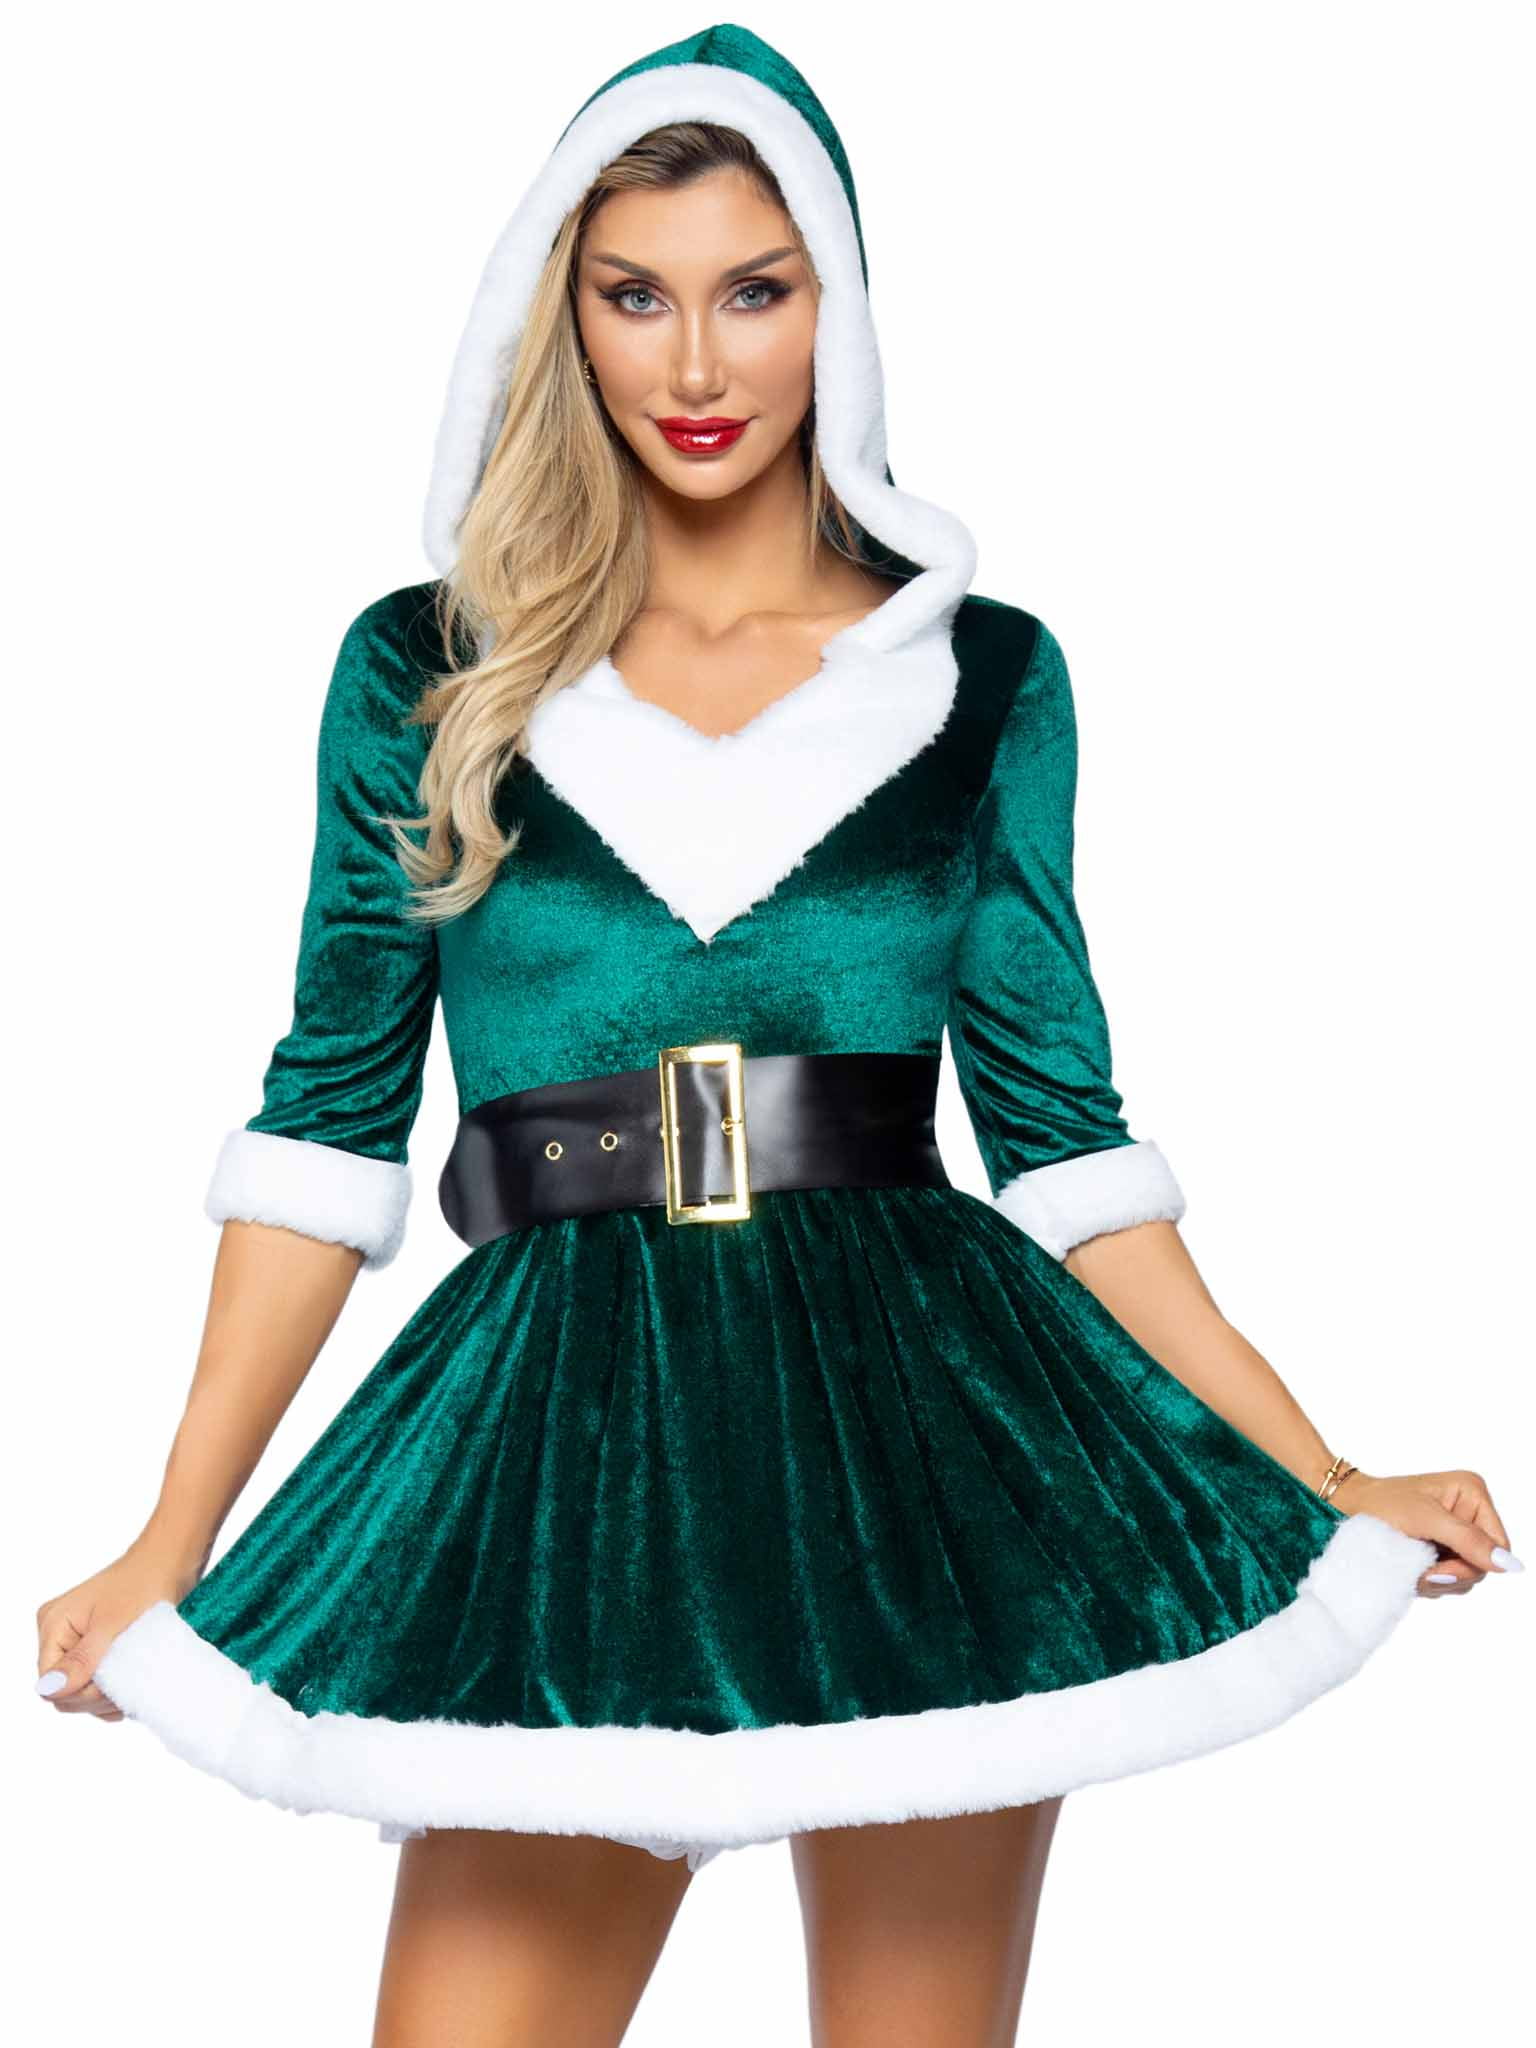 CHRISTMAS COSTUME MISS SANTA CLAUS OUTFIT Women ELF LADIES Fancy Dress 8 10 12